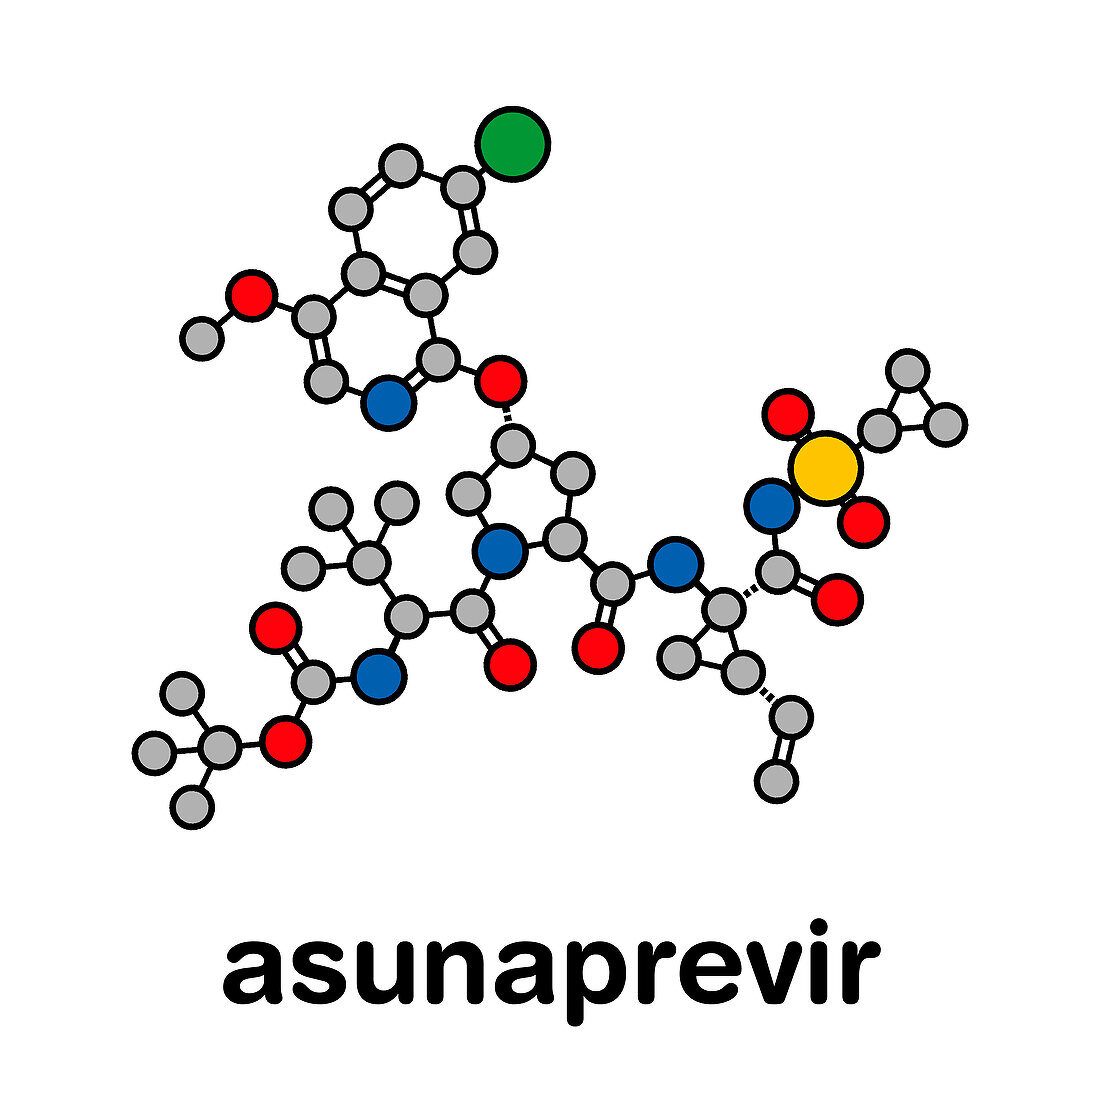 Asunaprevir hepatitis C virus drug, molecular model